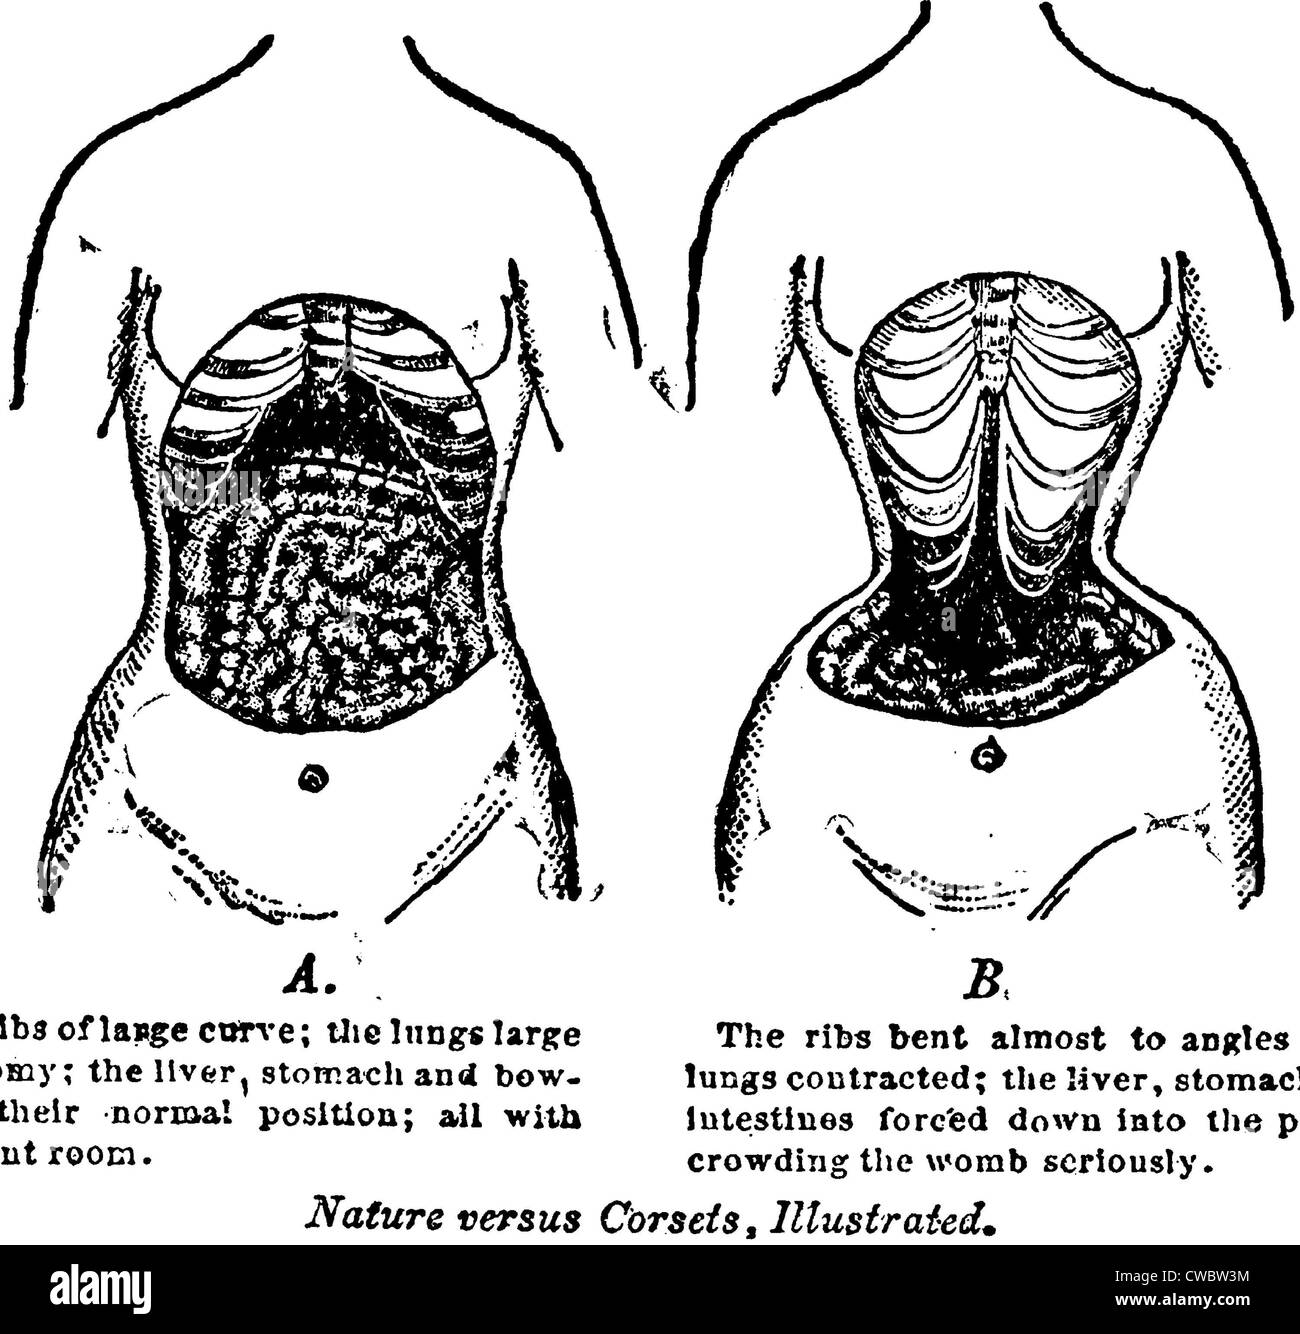 https://c8.alamy.com/comp/CWBW3M/nature-versus-corsets-at-left-is-the-natural-arrangement-of-a-womans-CWBW3M.jpg